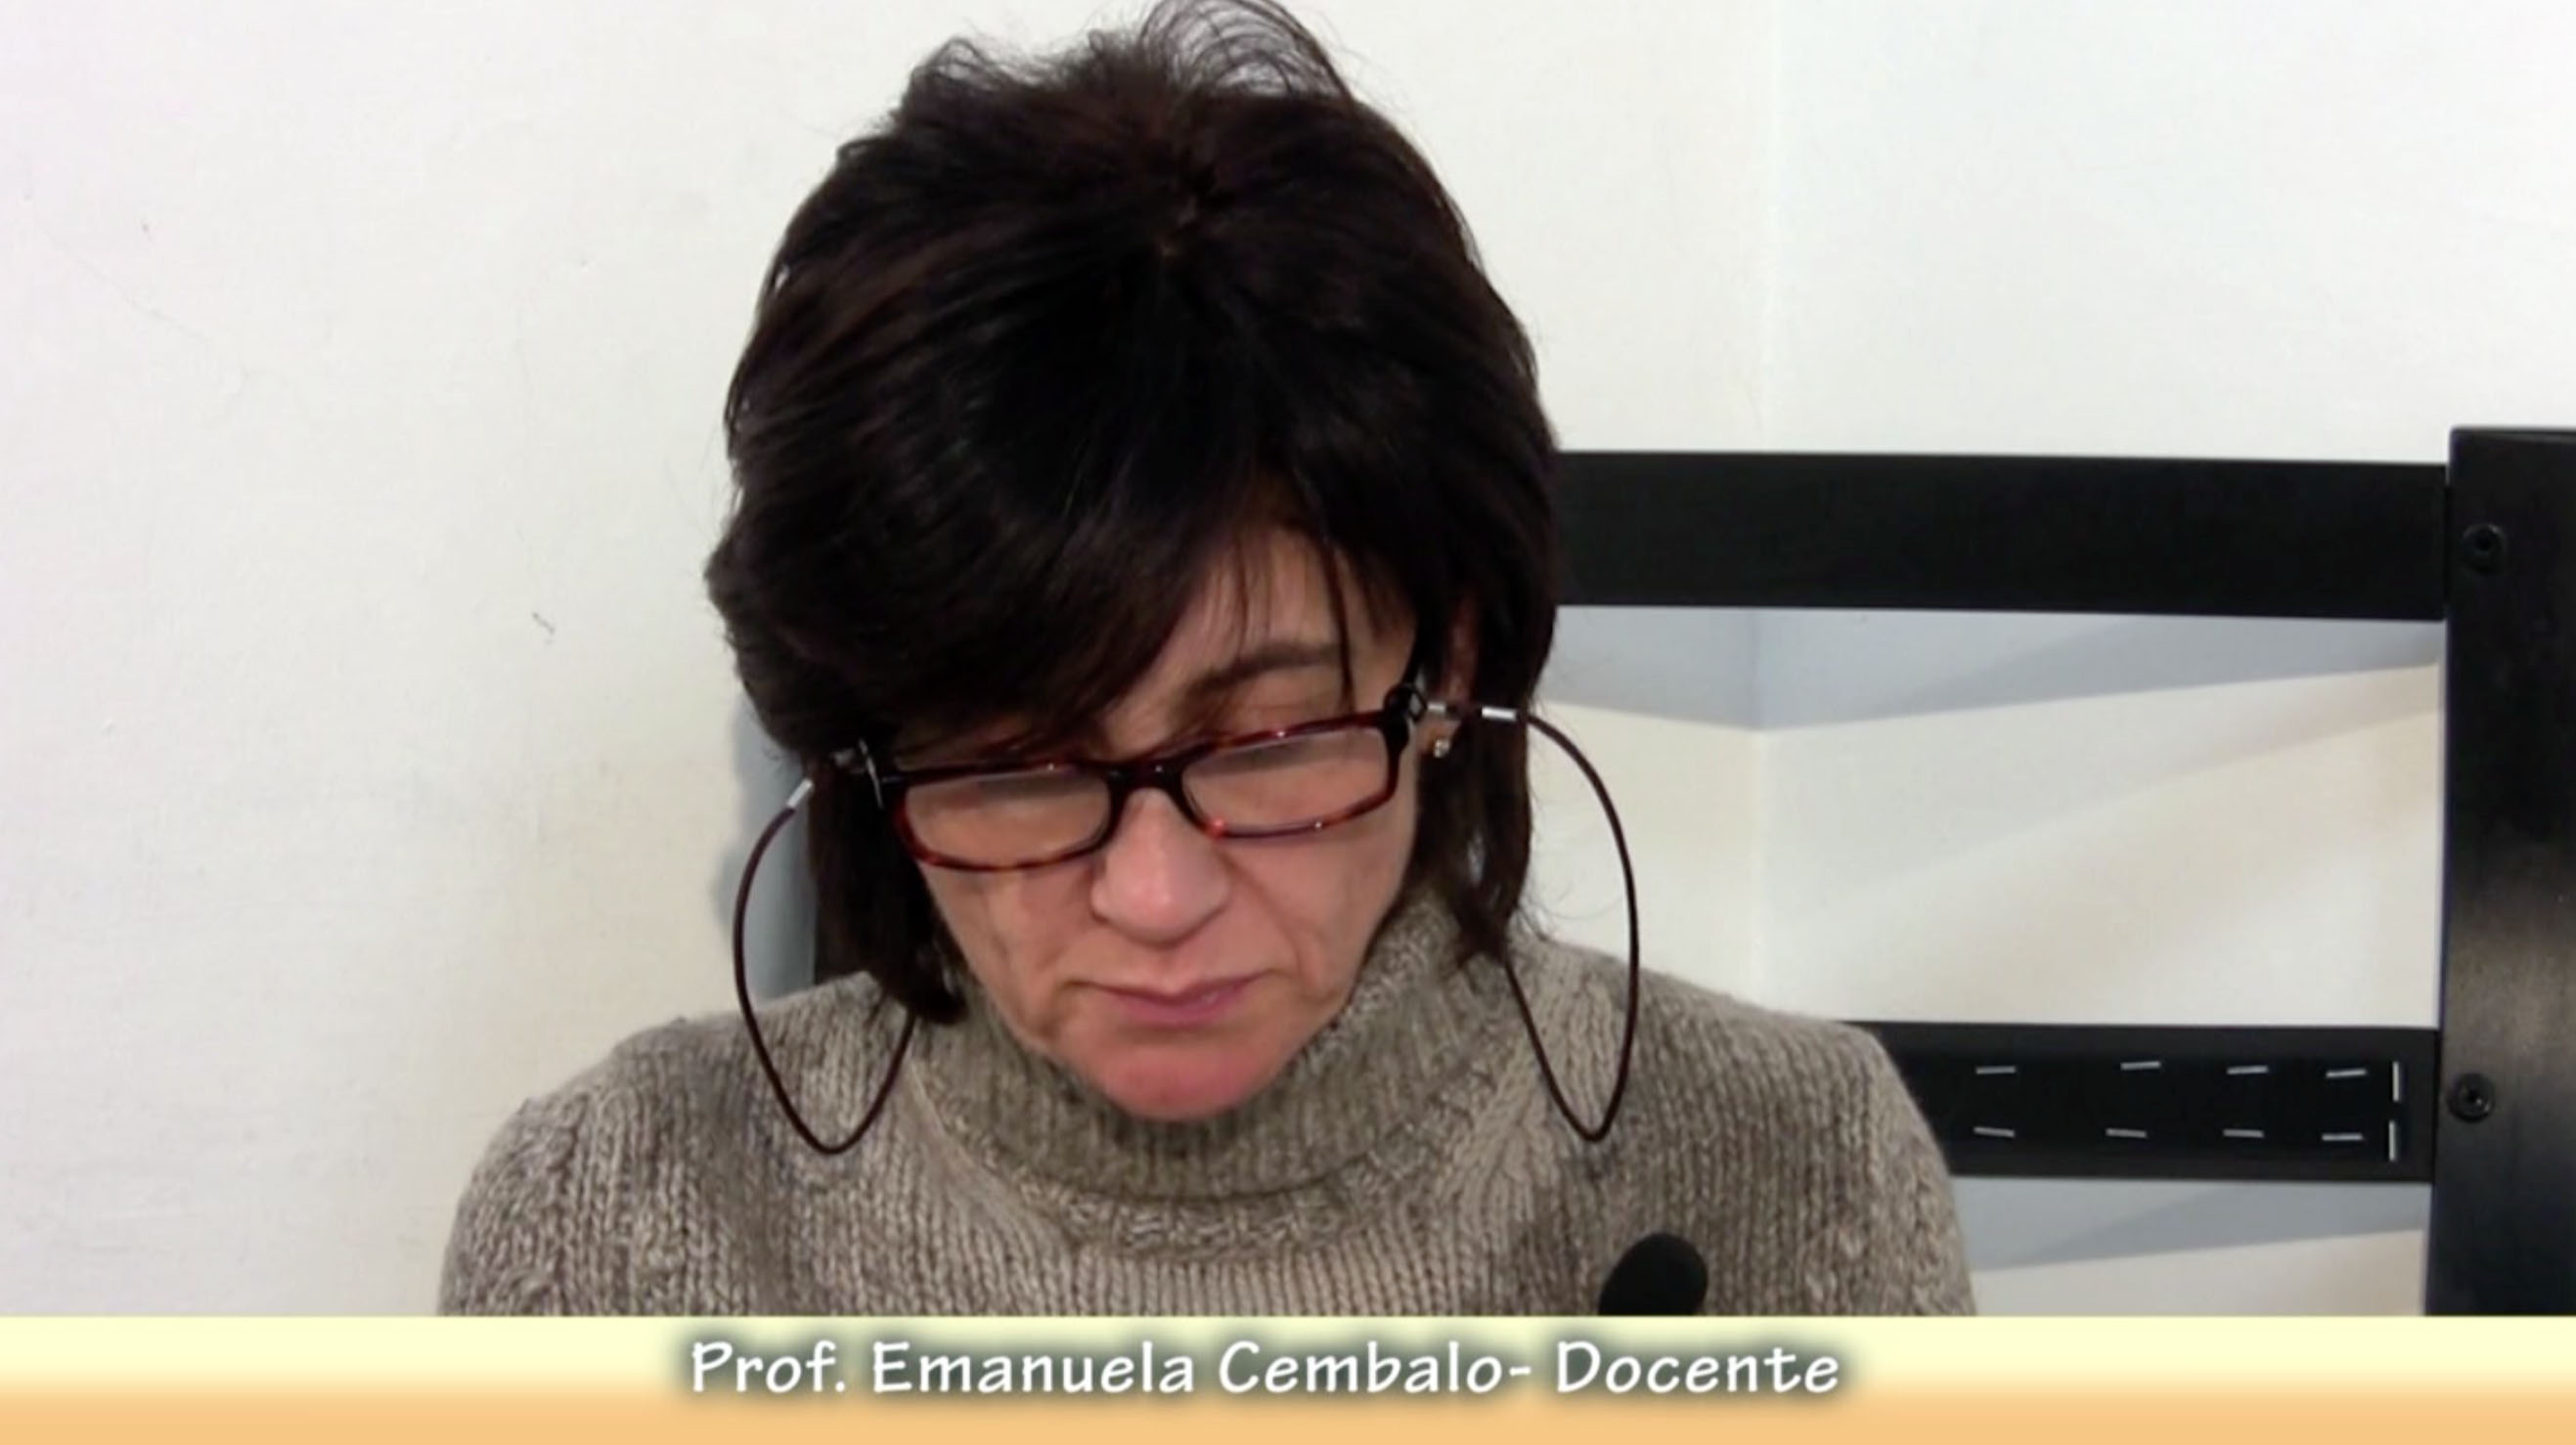 Emanuela Cembalo 2 - Docente 